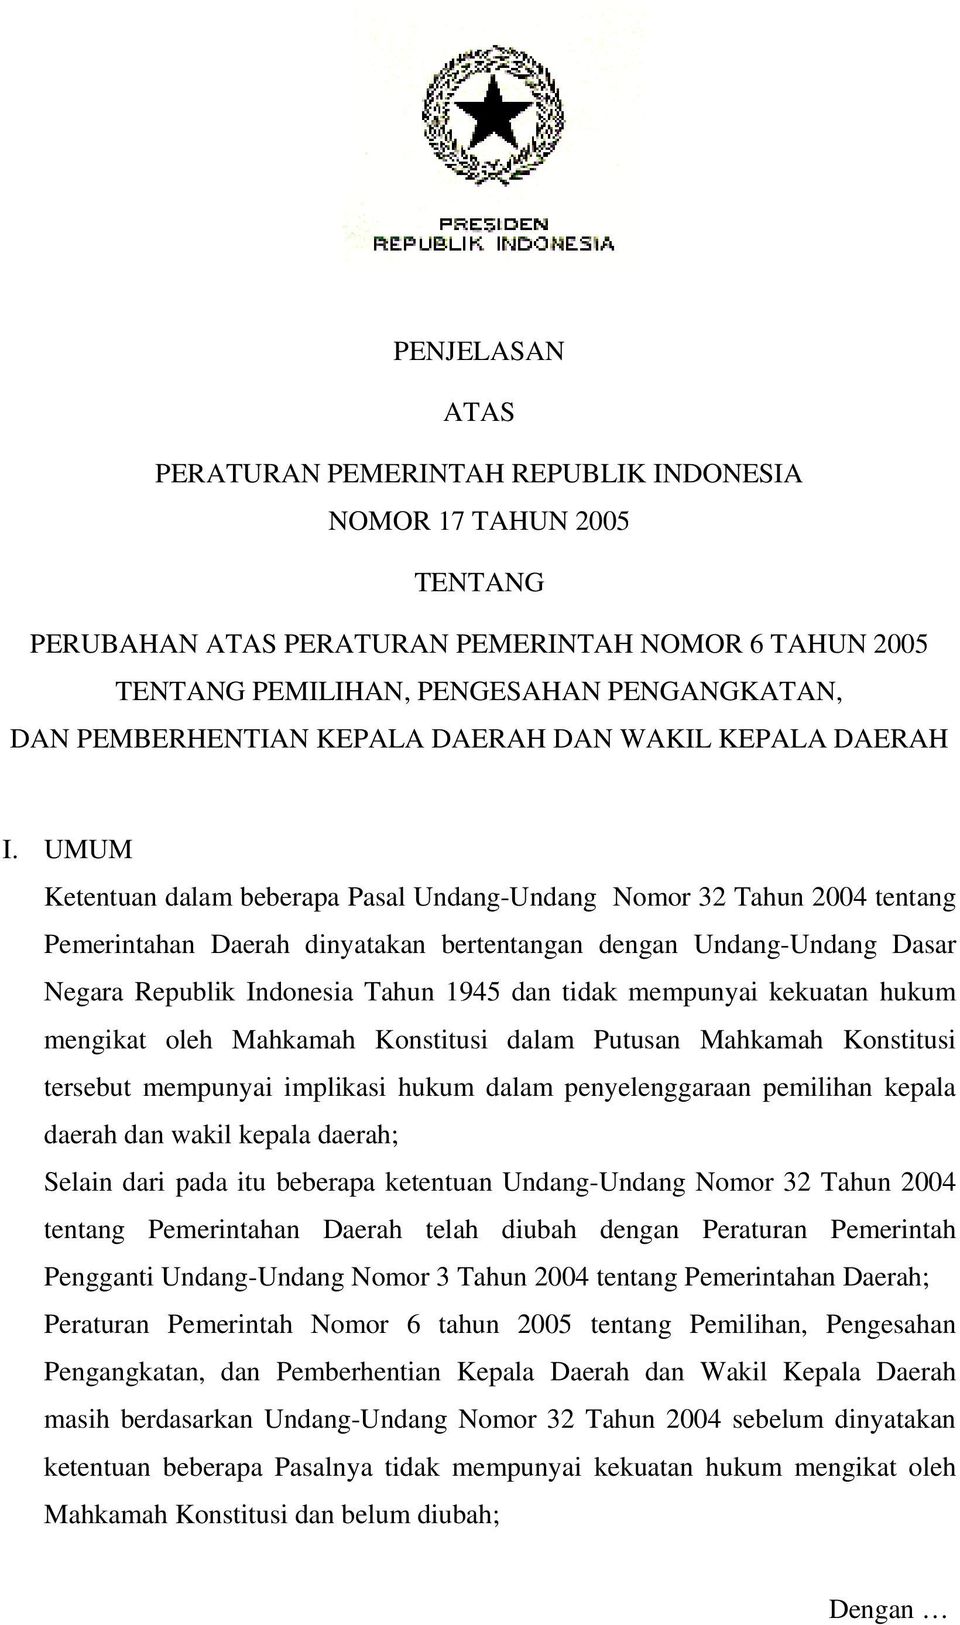 UMUM Ketentuan dalam beberapa Pasal Undang-Undang Nomor 32 Tahun 2004 tentang Pemerintahan Daerah dinyatakan bertentangan dengan Undang-Undang Dasar Negara Republik Indonesia Tahun 1945 dan tidak